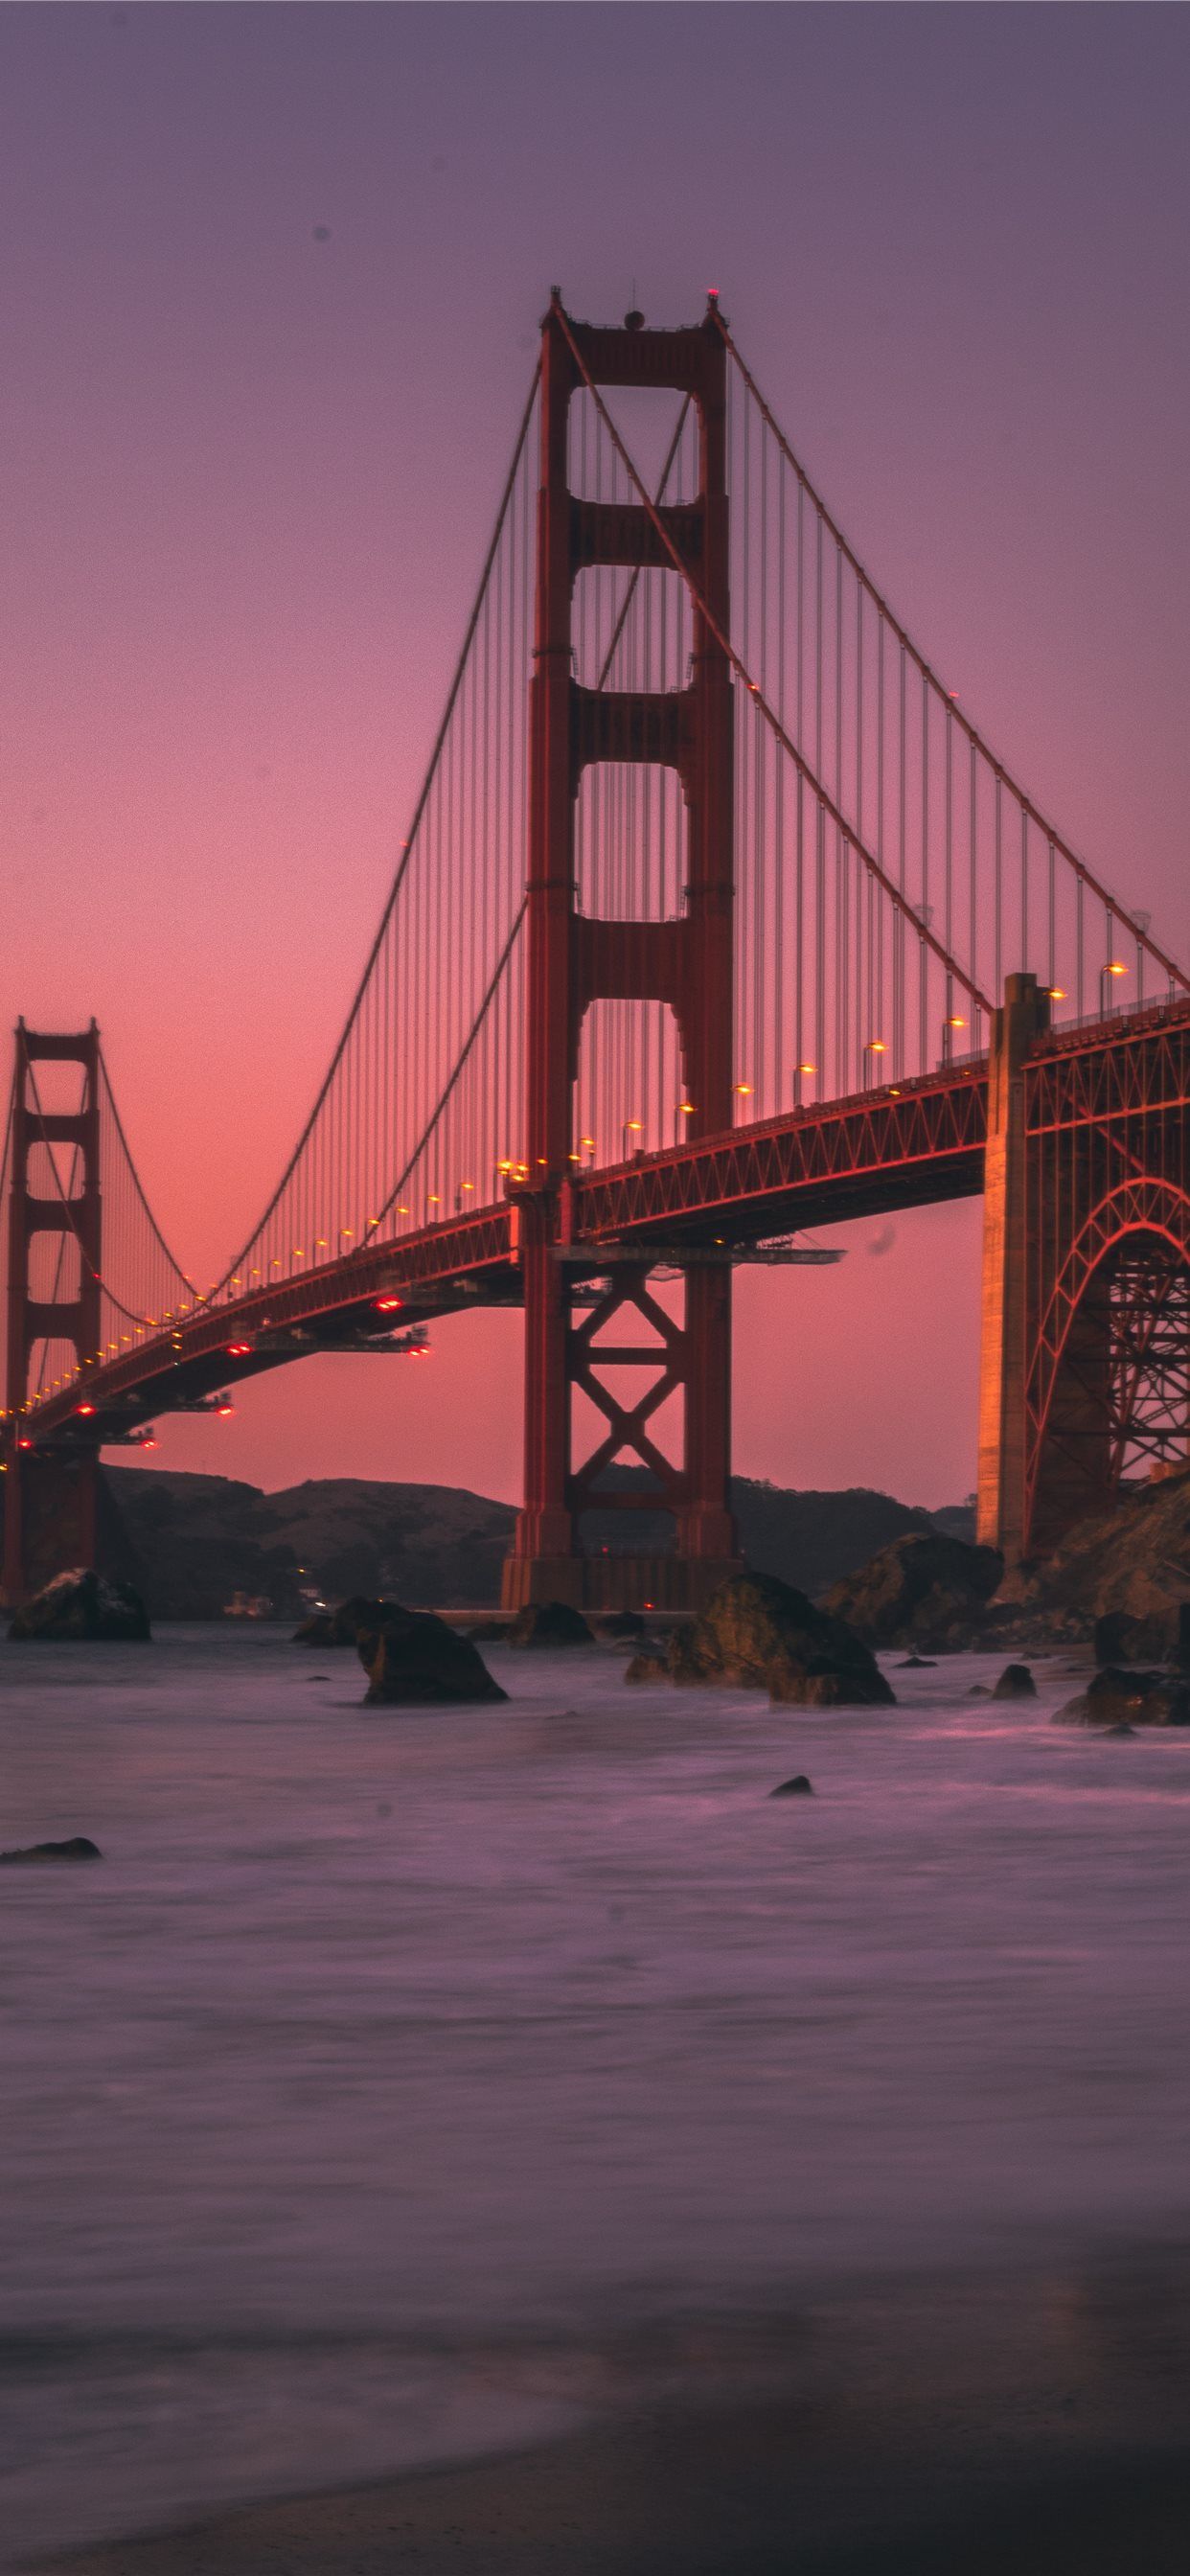 Golden Gate Bridge during sunset iPhone X Wallpaper Free Download